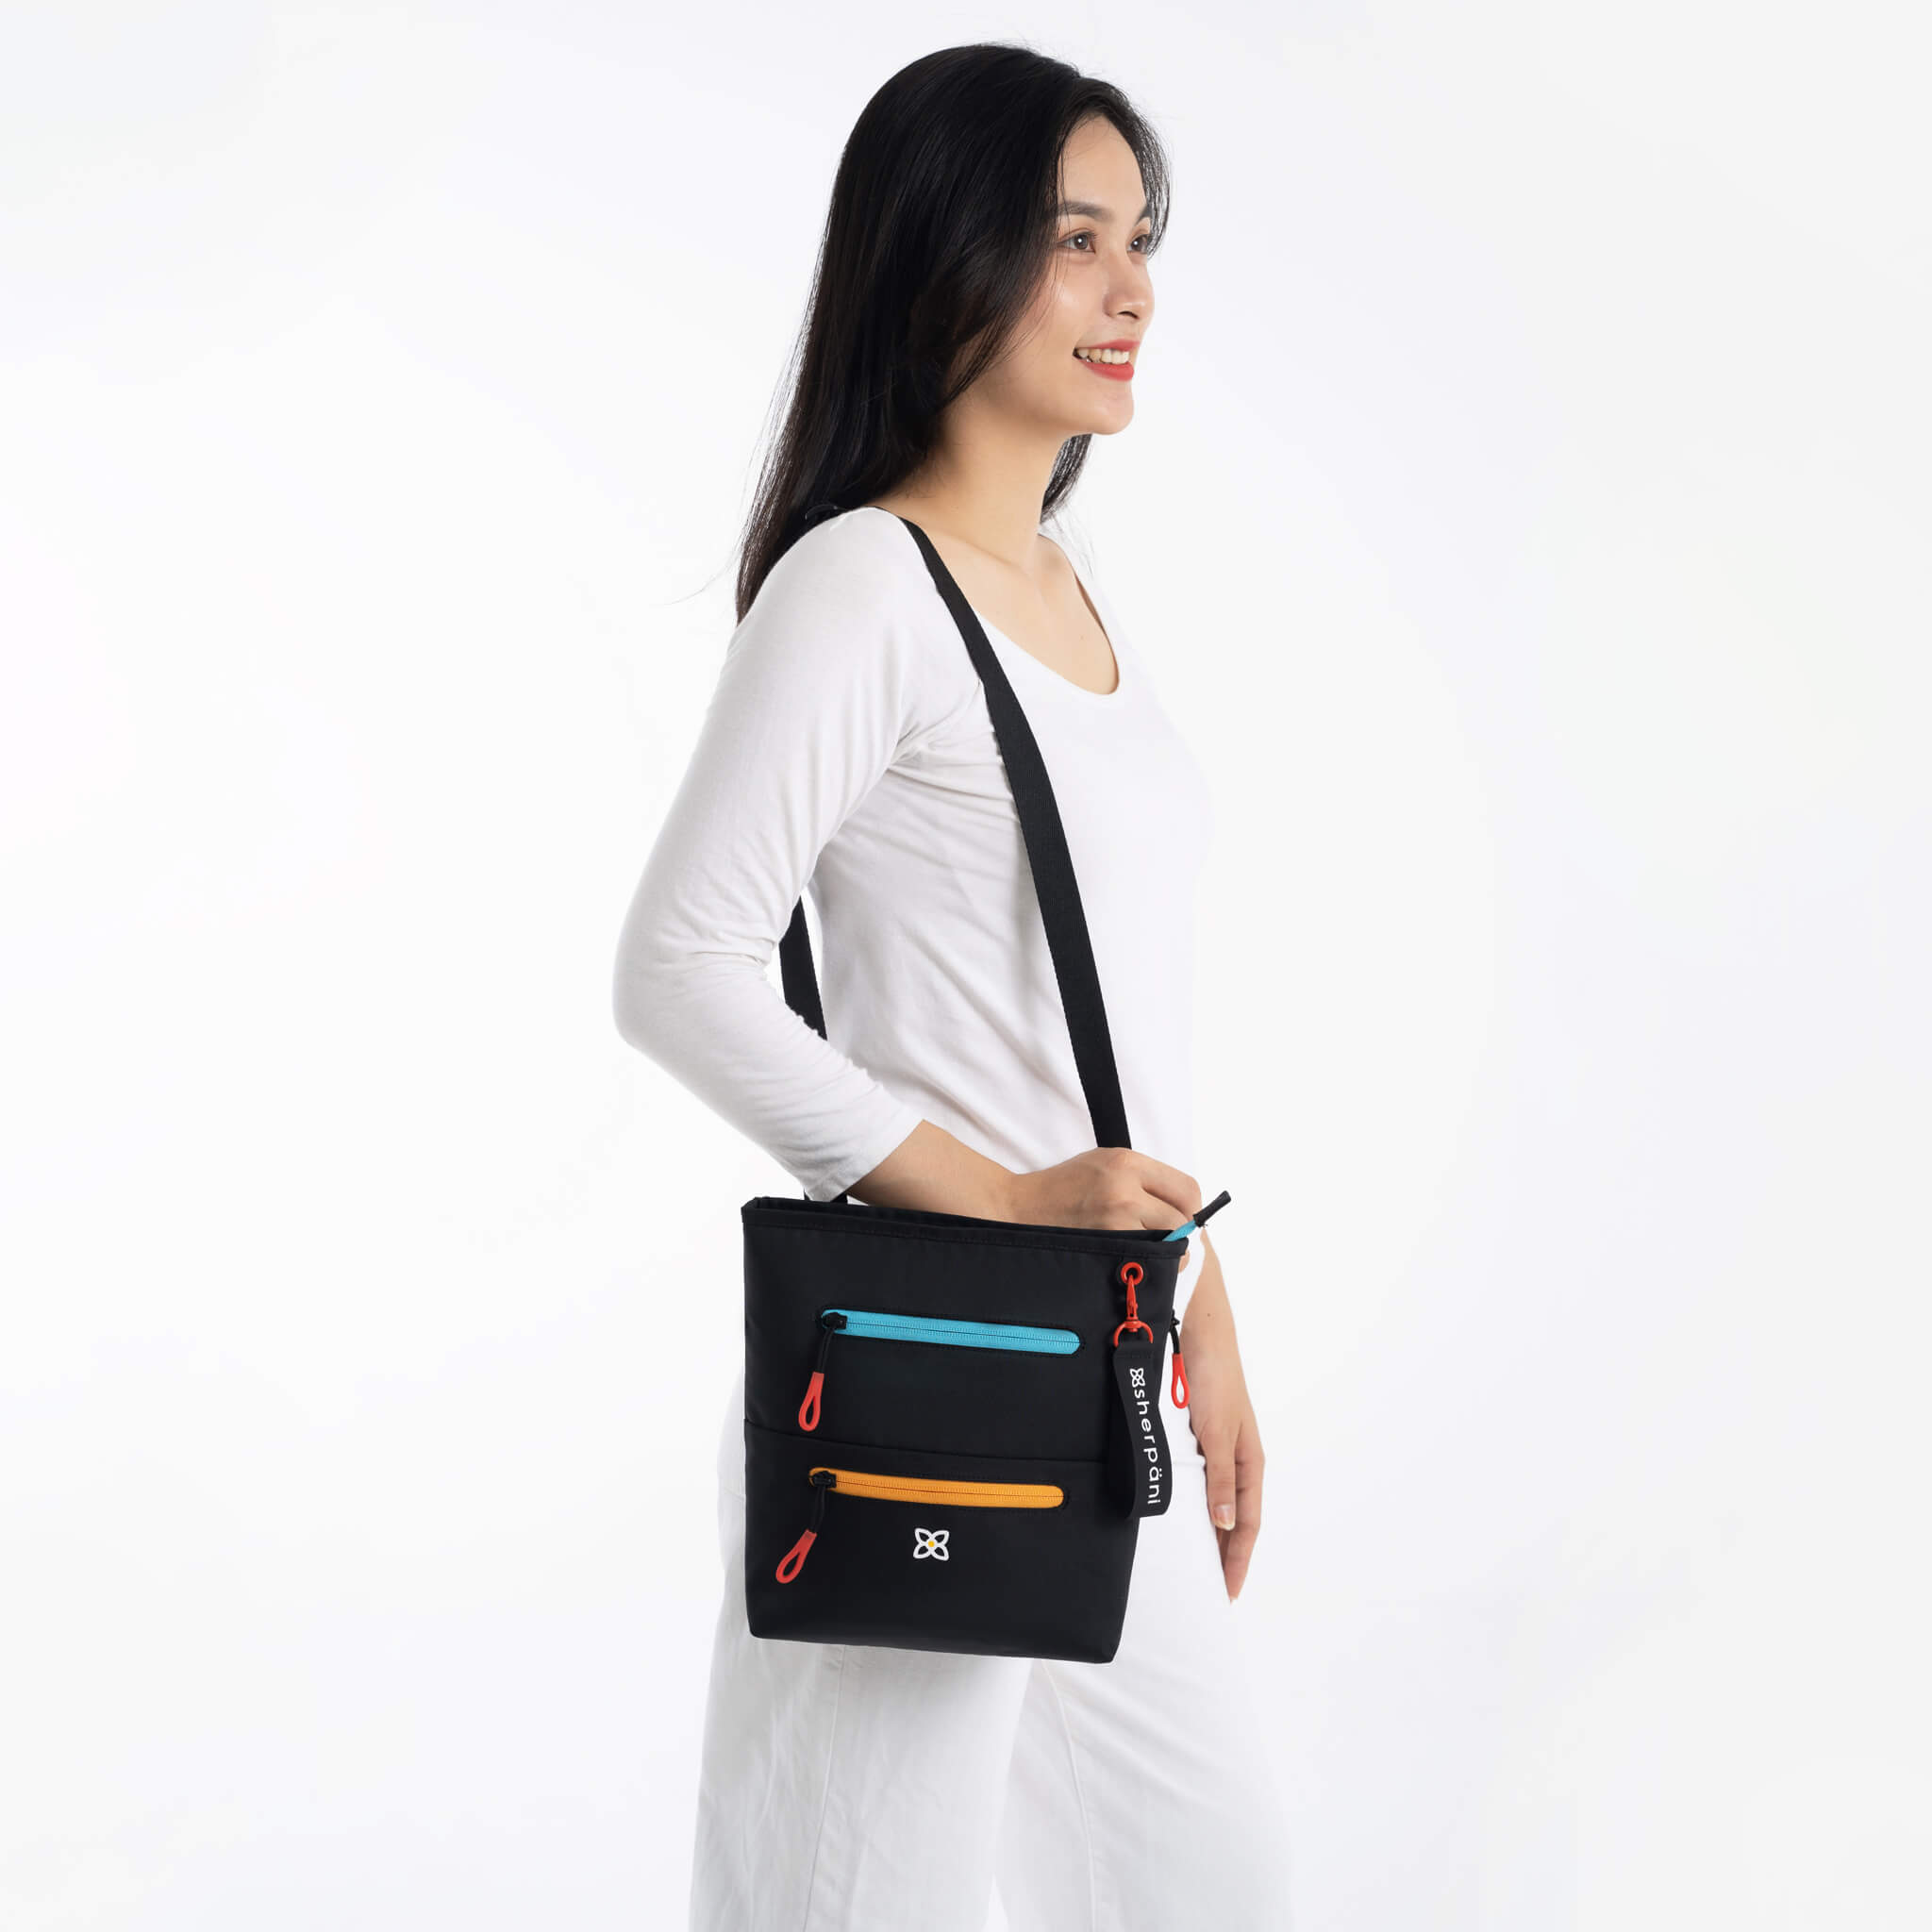 A model wearing Sherpani RFID blocking purse, the Sadie in Chromatic.